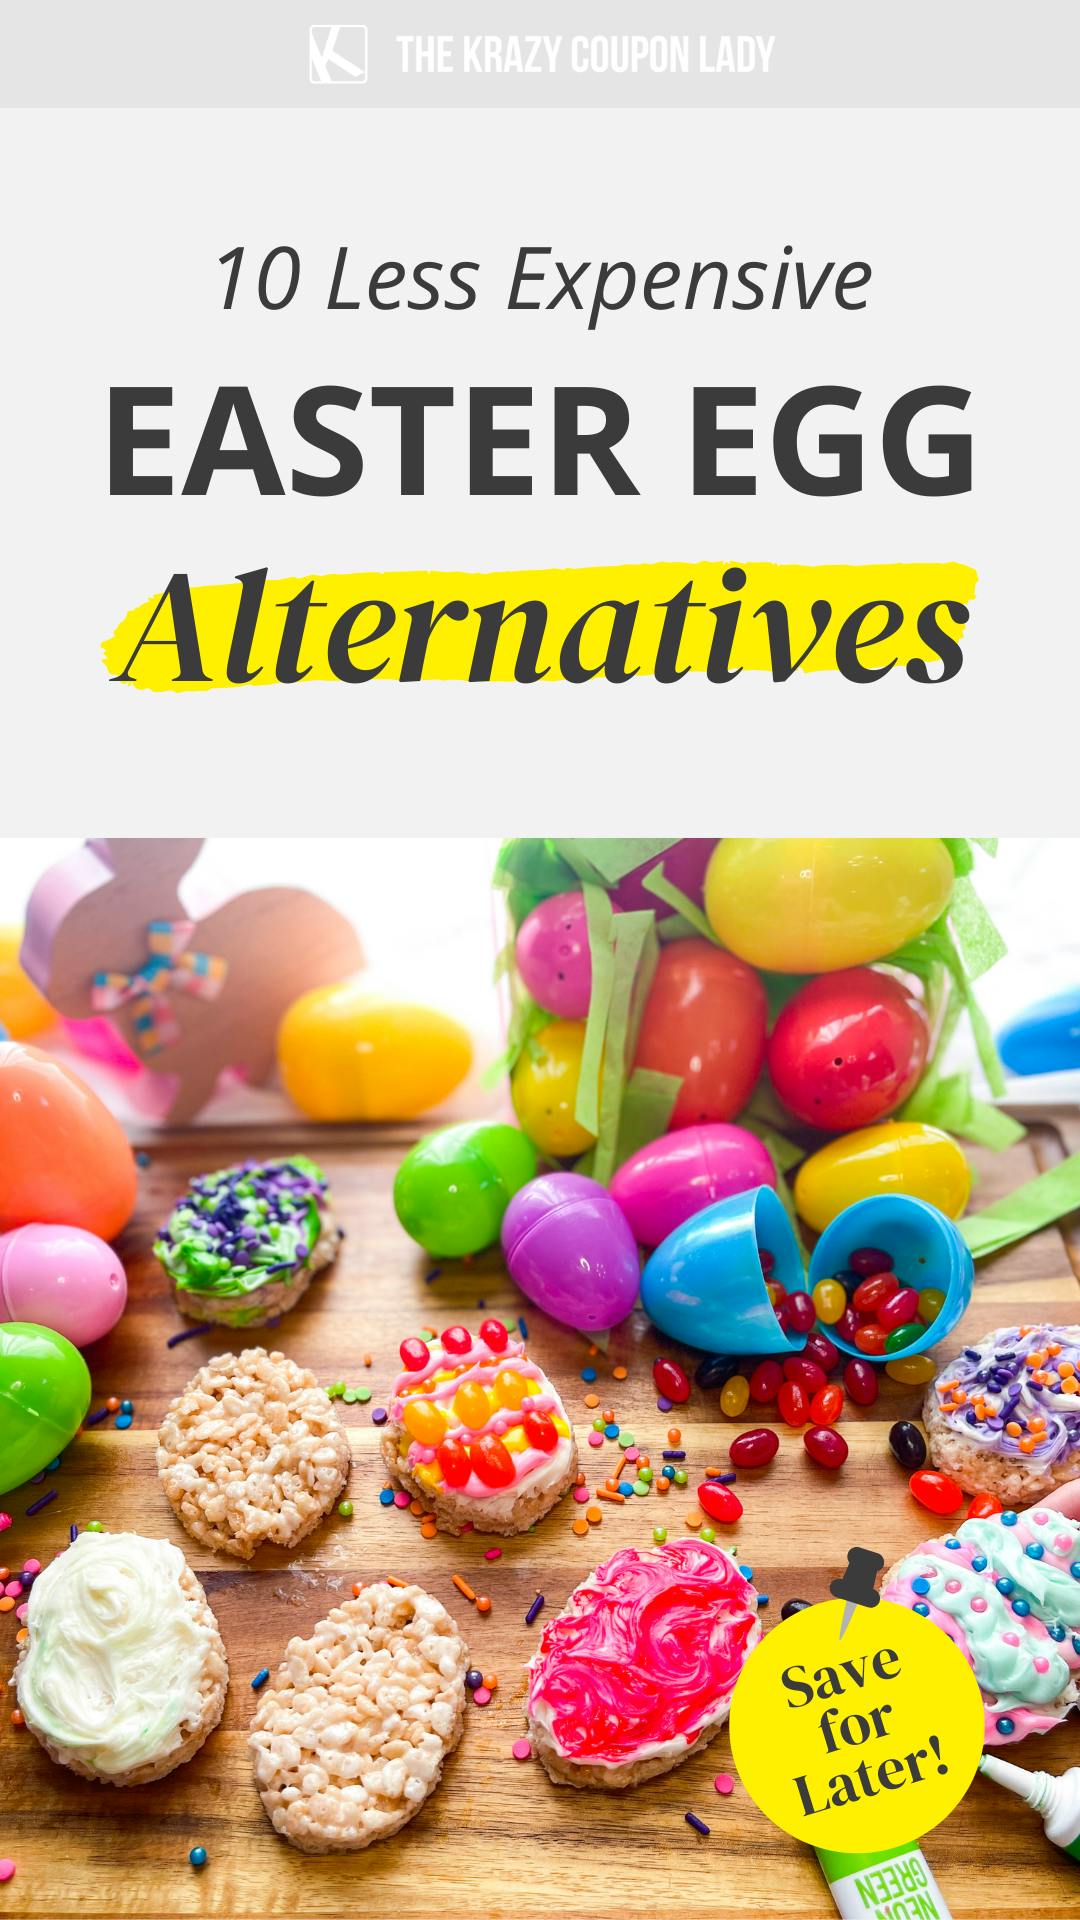 10 Easter Egg Alternatives — Dyeable Plastic Egg Kits From $2 Now at Walmart & Target!